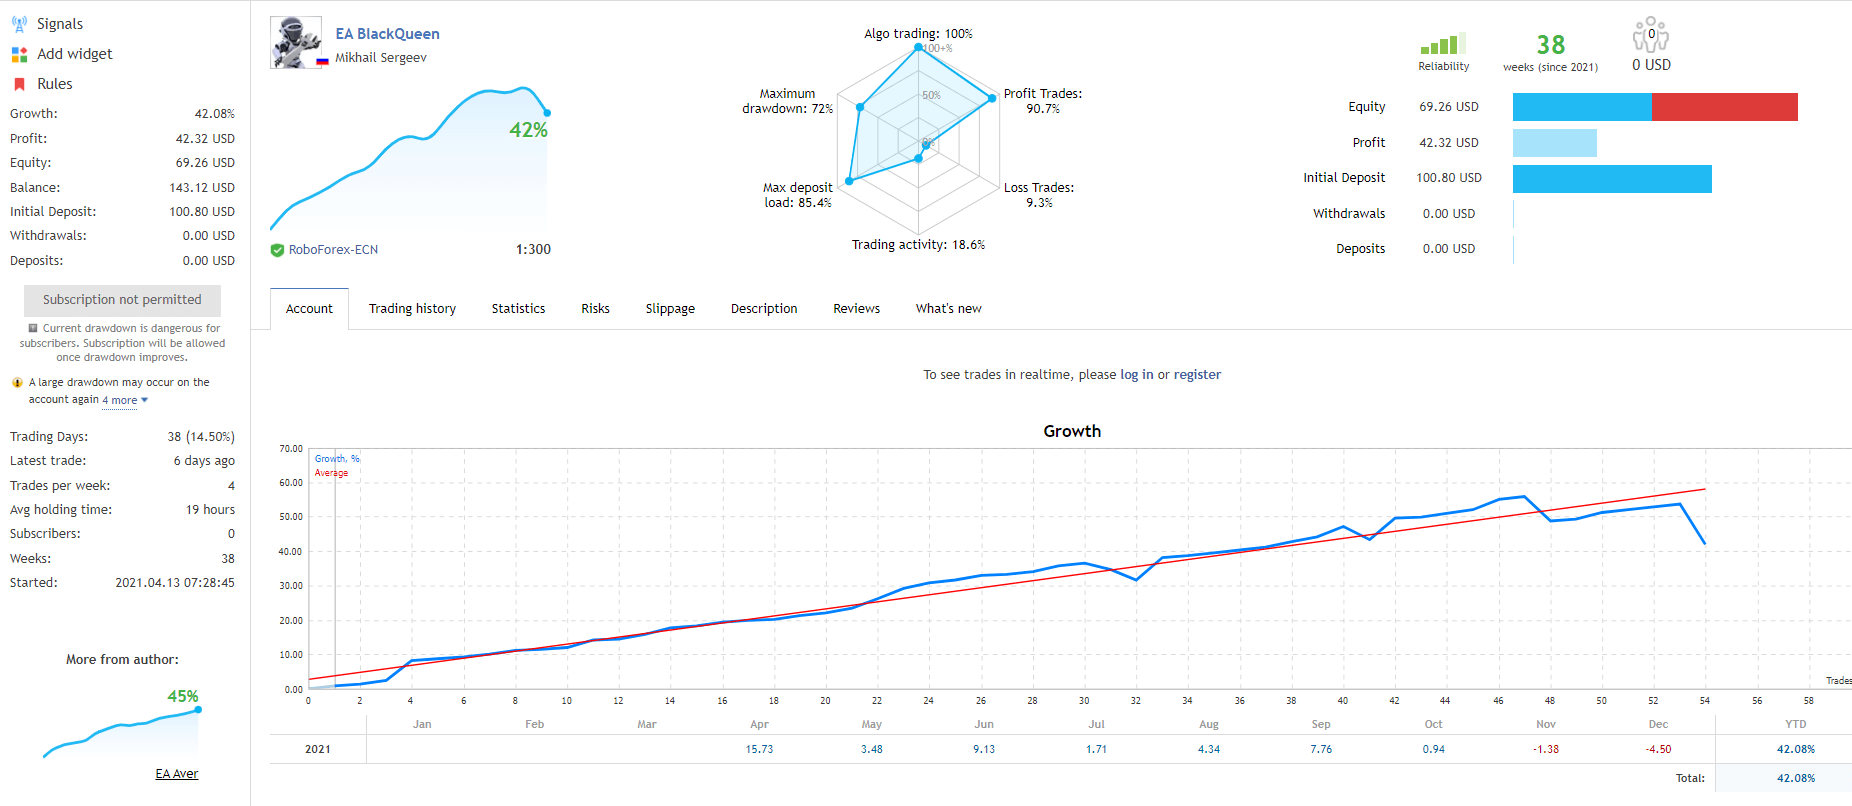 Growth chart of BlackQueen